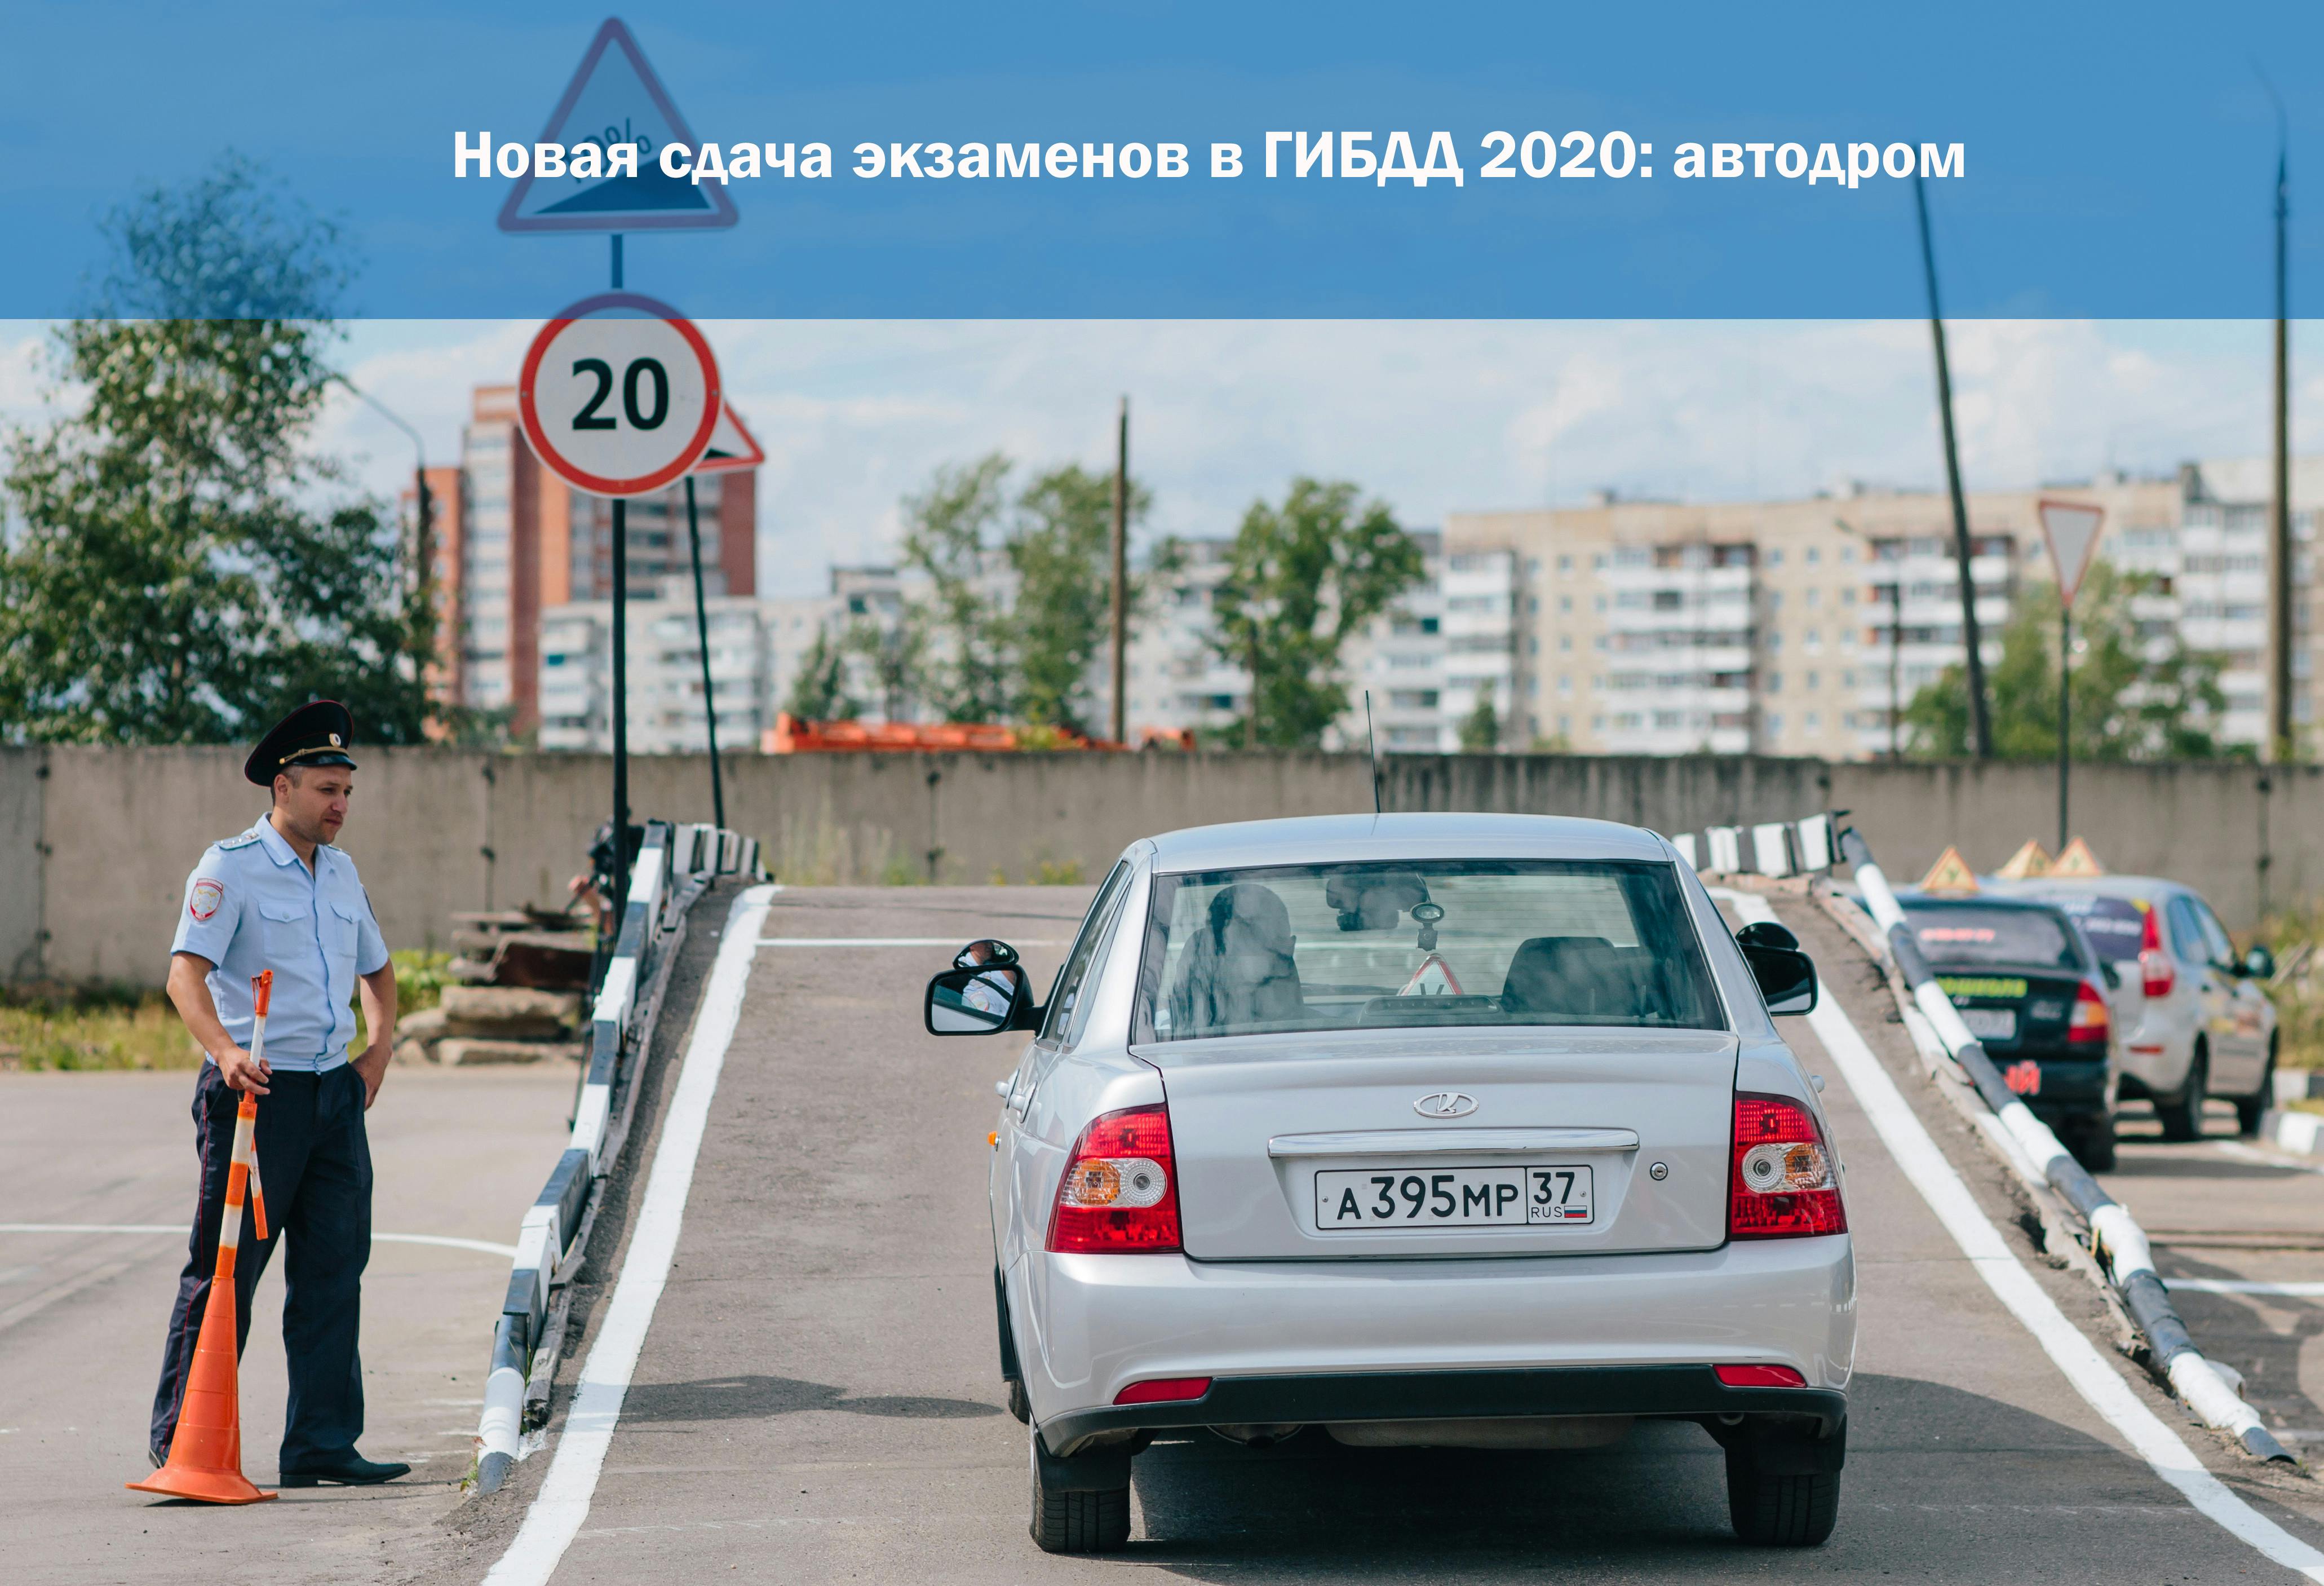 Регламент сдачи экзаменов в ГИБДД на автодроме 2020